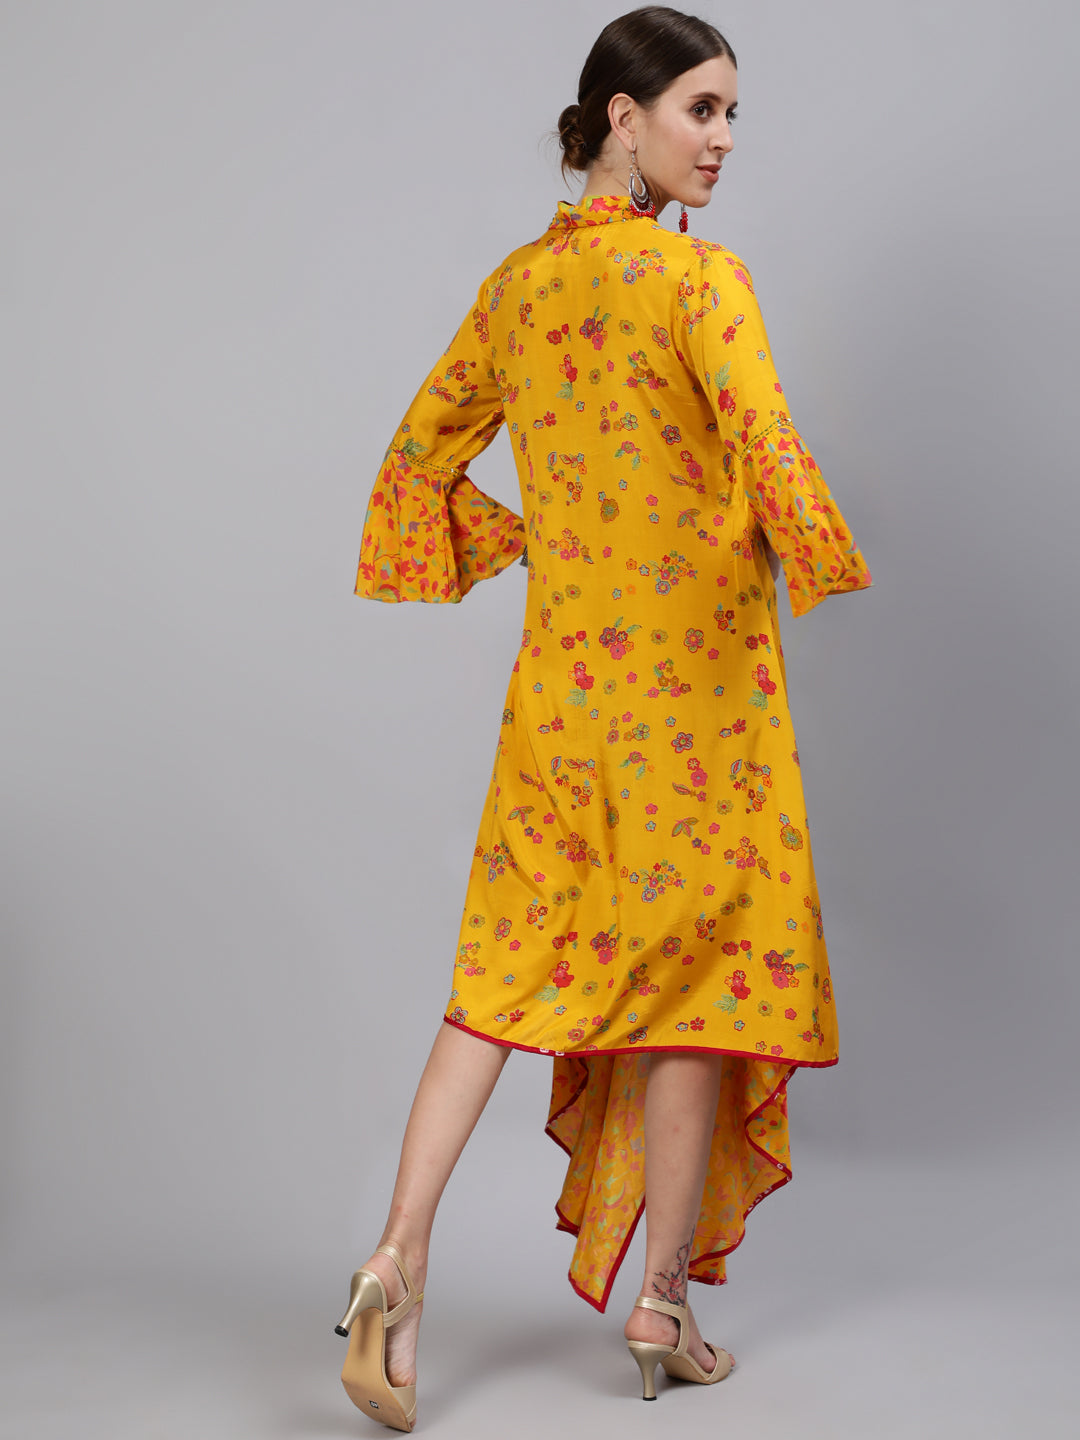 Ishin Women's Mustard Yellow Floral PrintedMaxi Dress